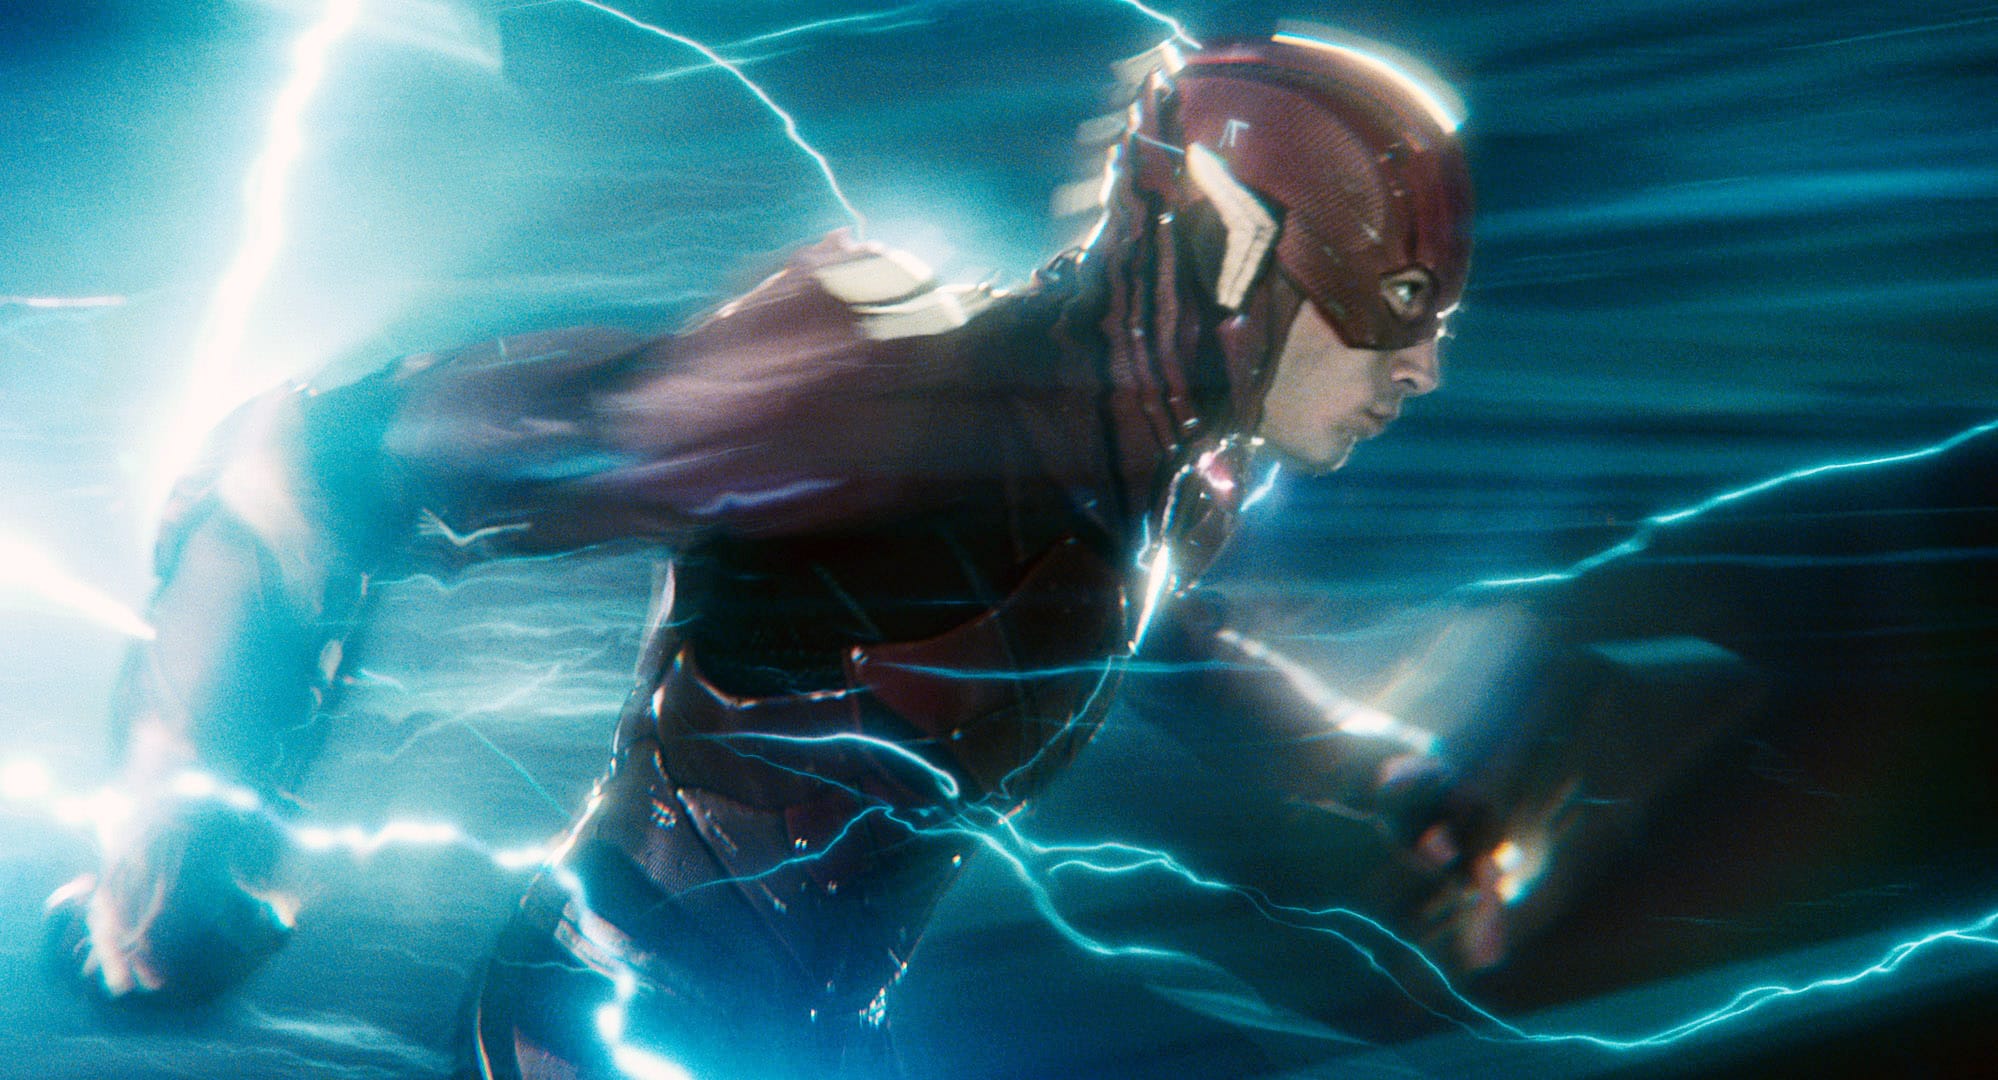 JUSTICE LEAGUE, Ezra Miller as The Flash, 2017